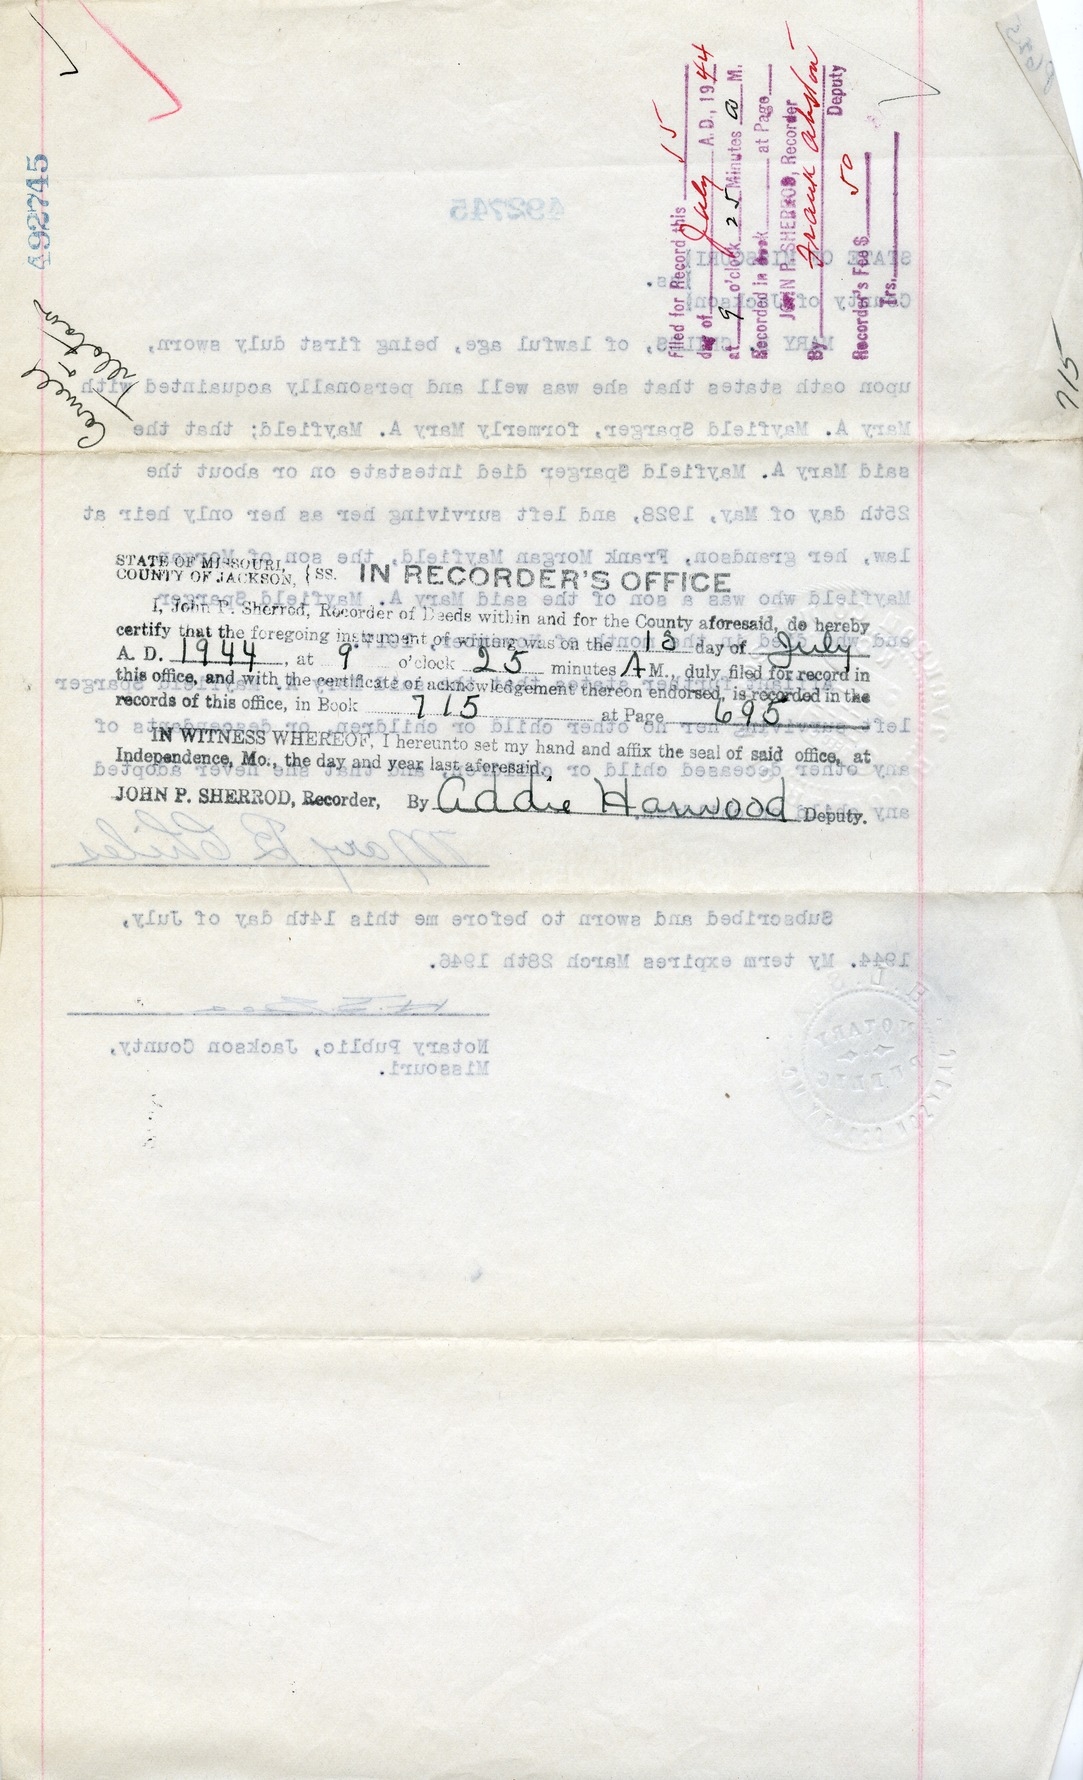 Affidavit of Mary B. Chiles